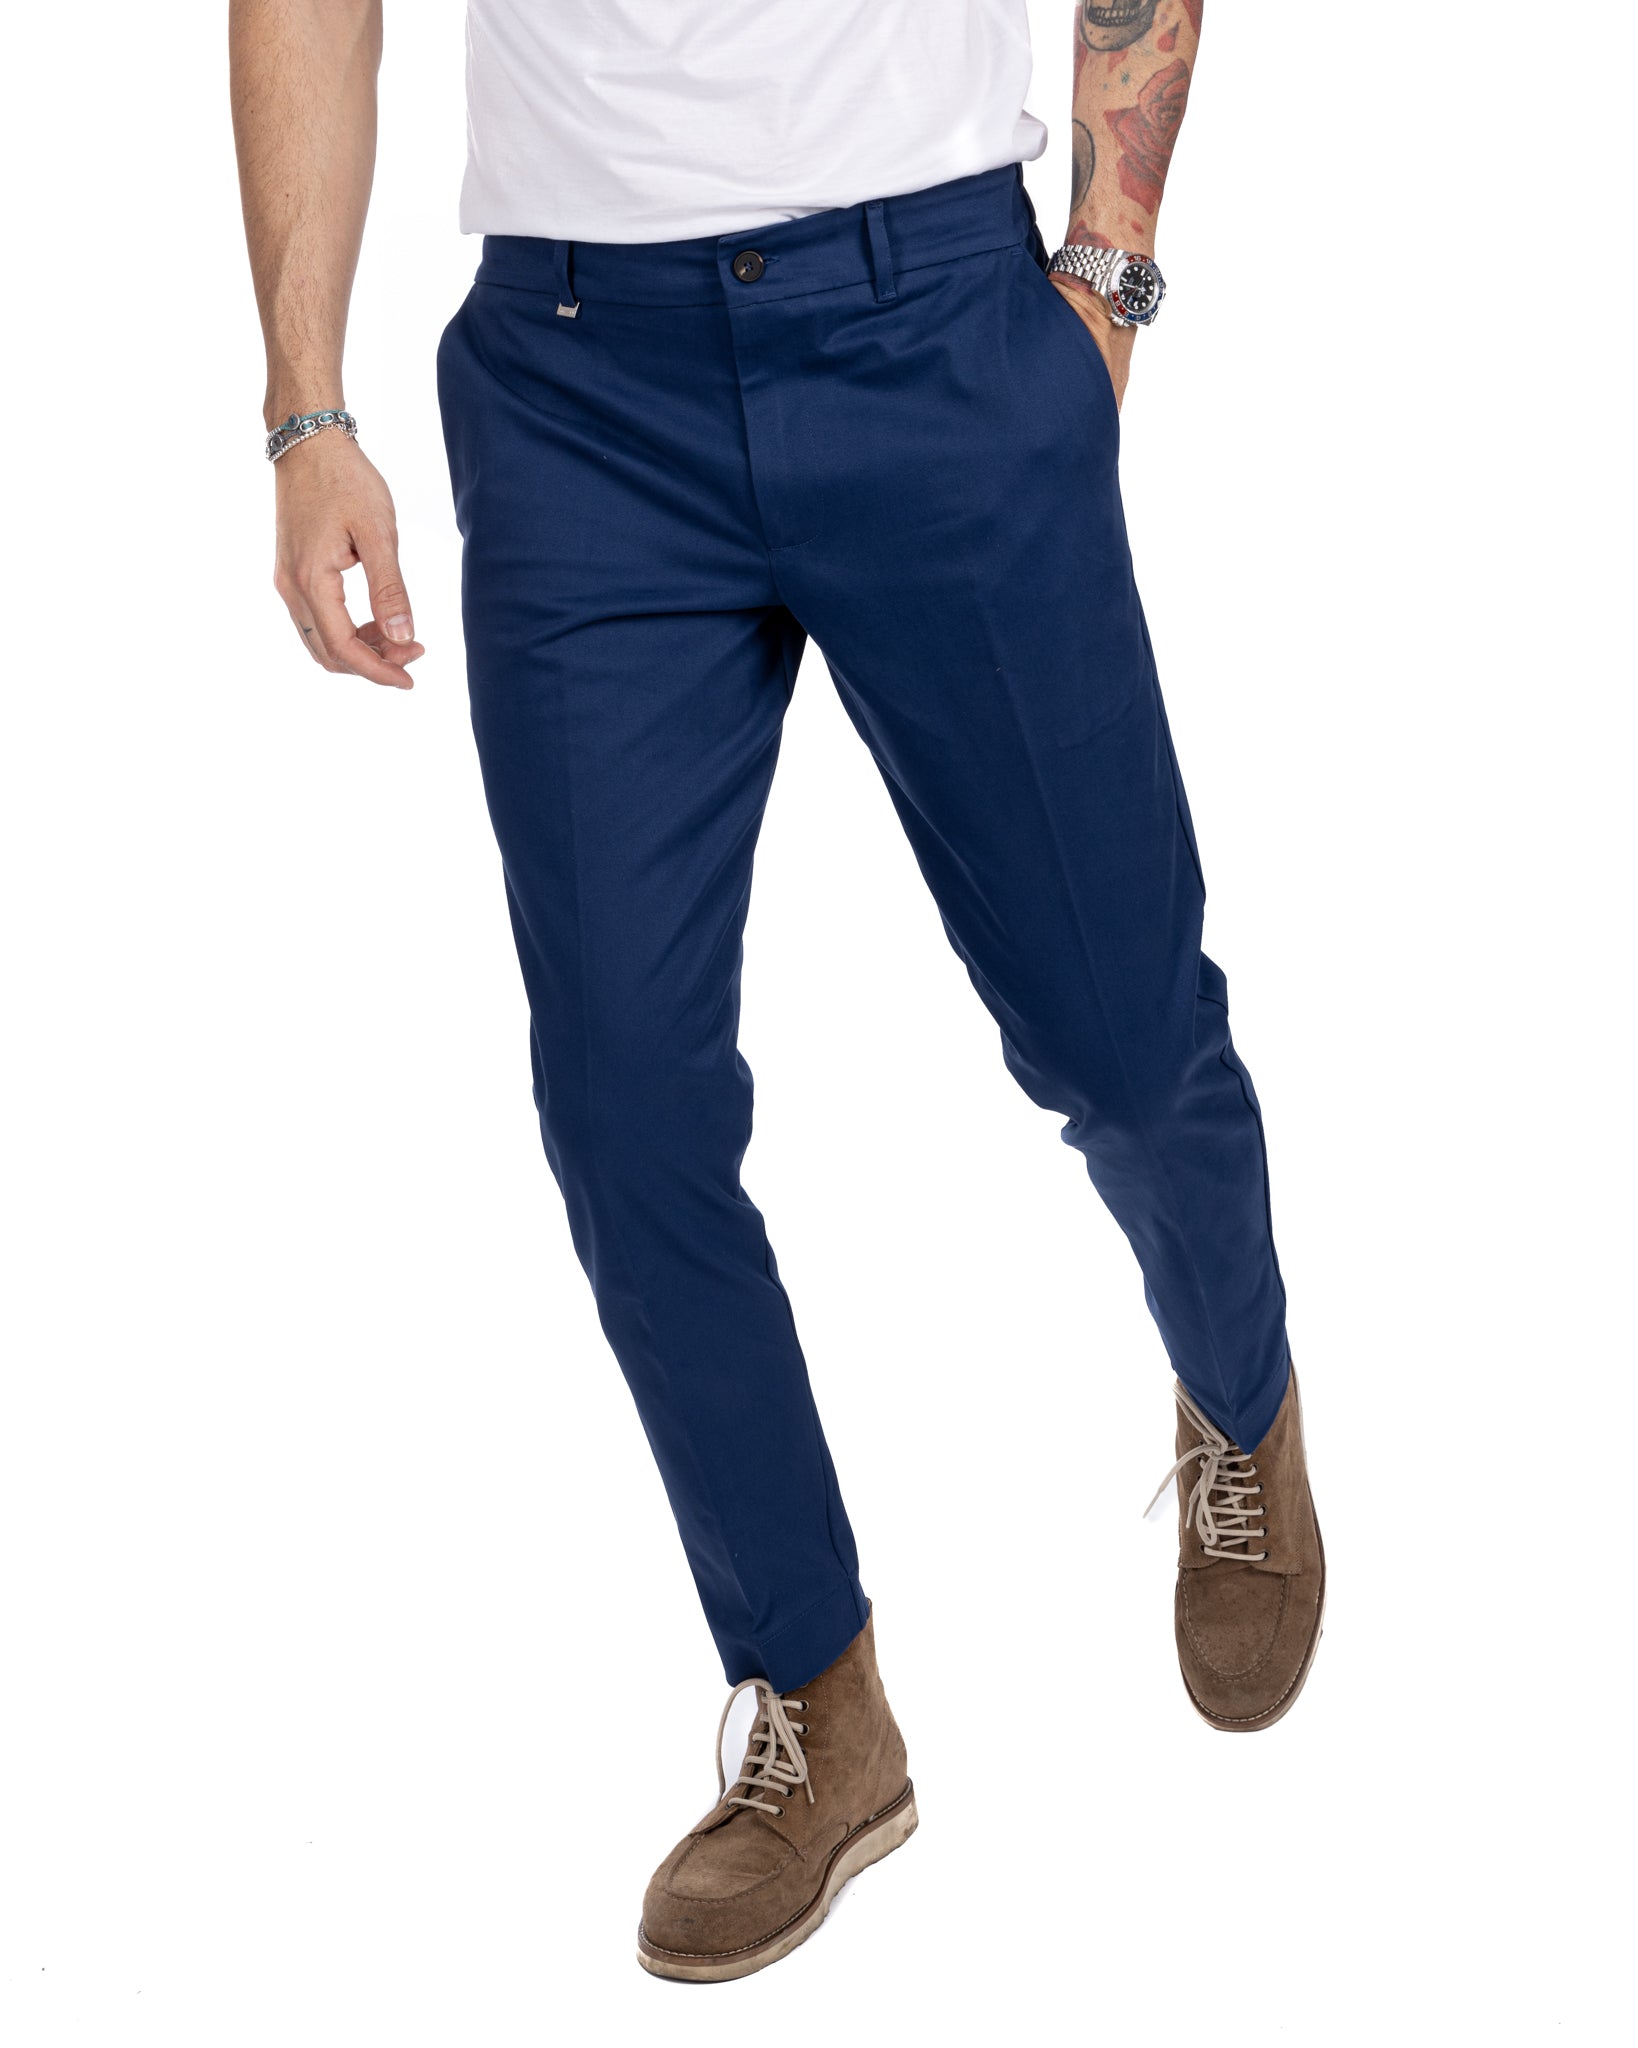 Elder - blue capri trousers in cotton